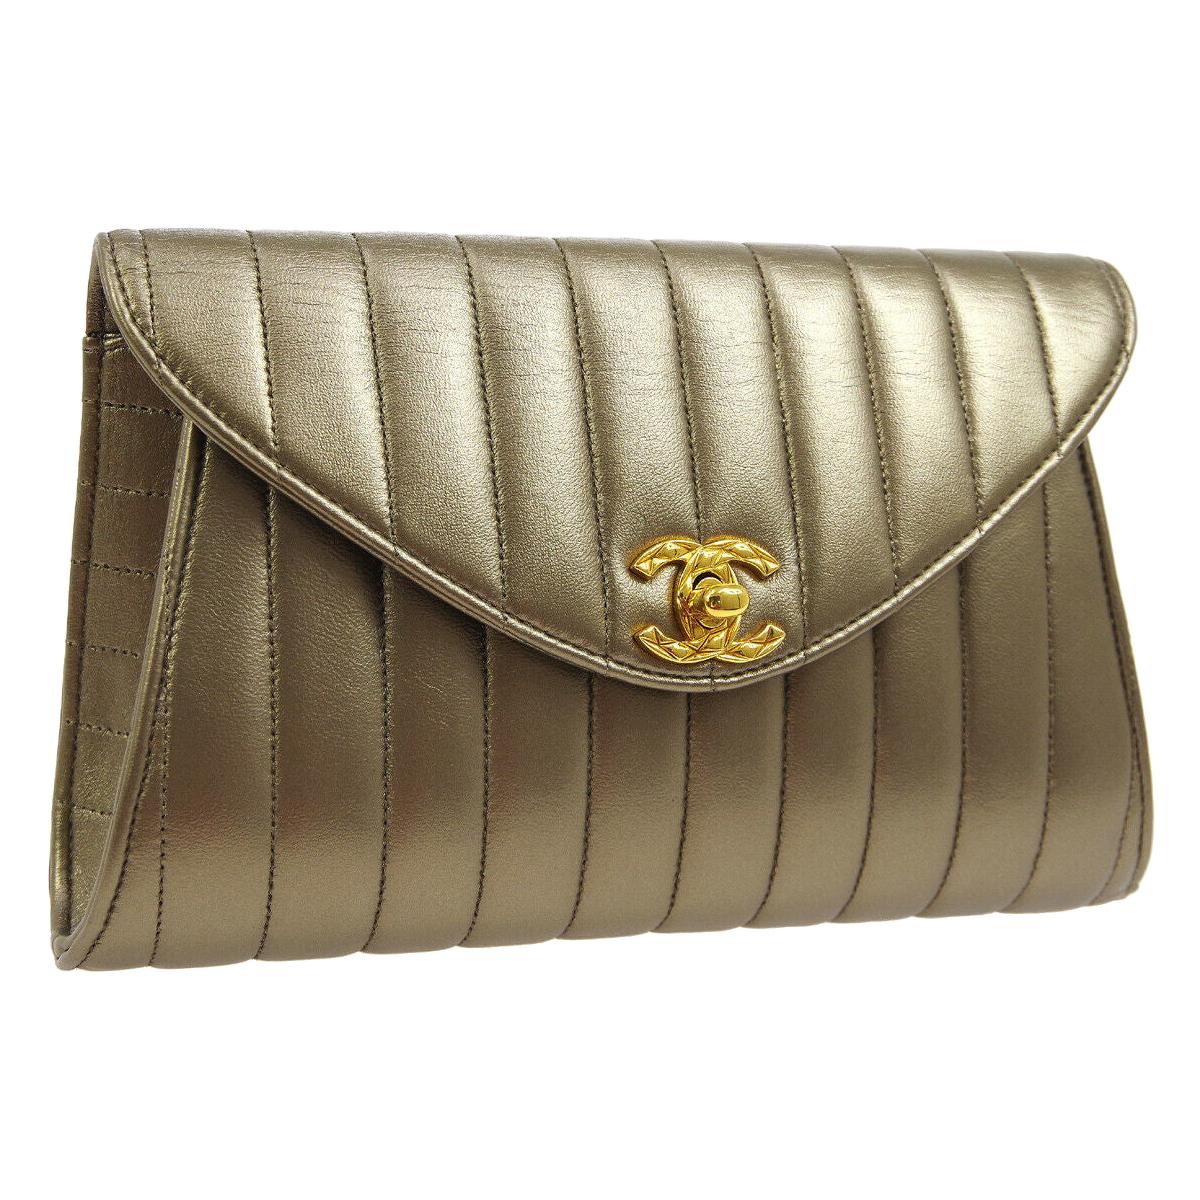 Chanel Metallic Gold Leather Bronze Envelope Evening Slip Hand Clutch Flap Bag 